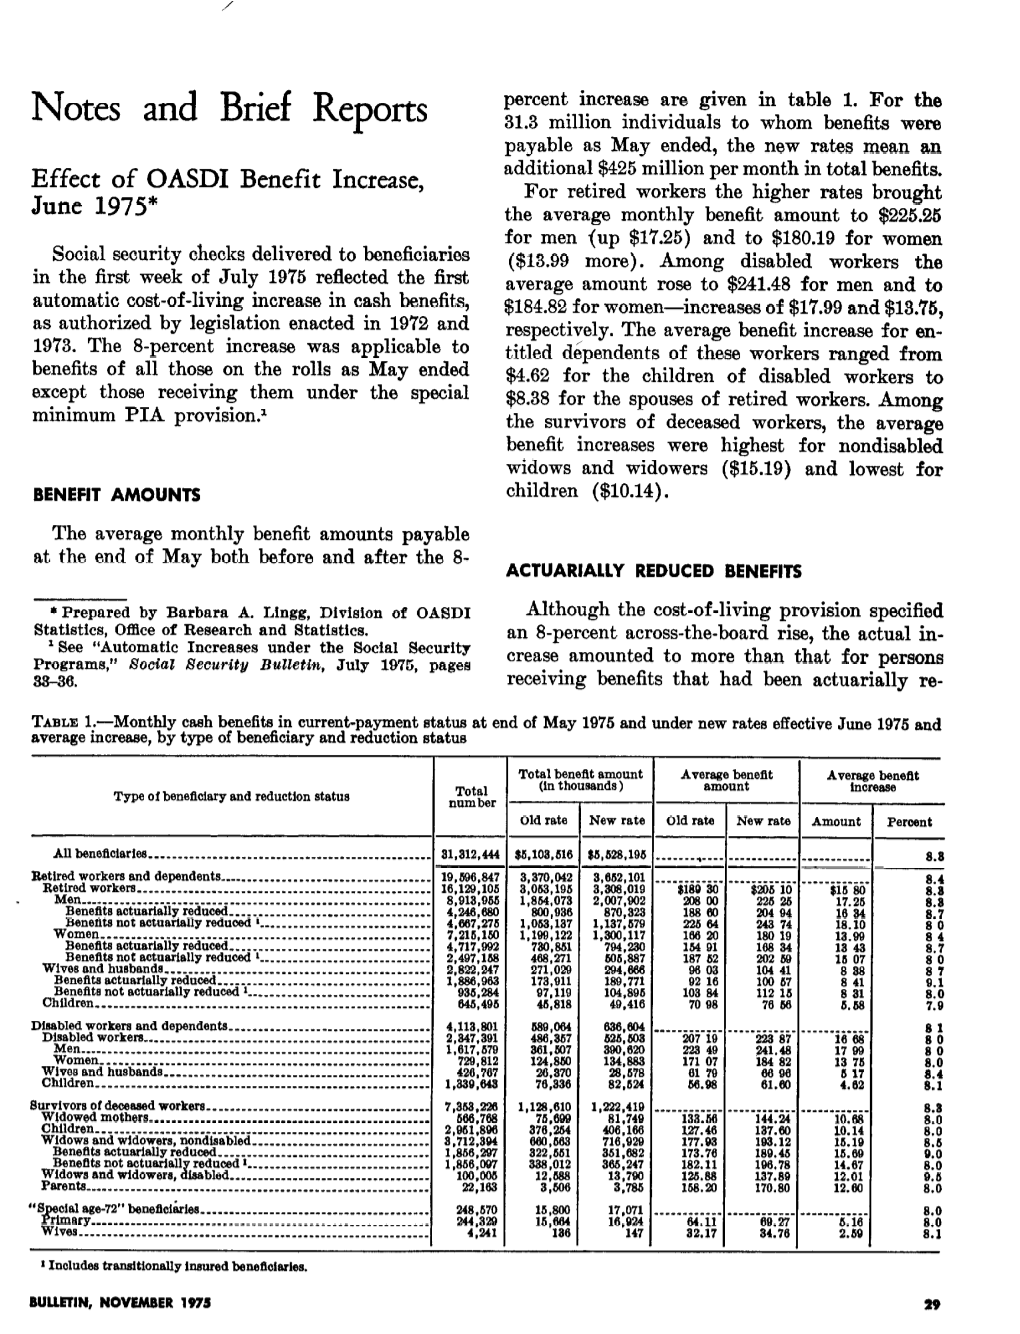 Effect of OASDI Benefit Increase, June 1975